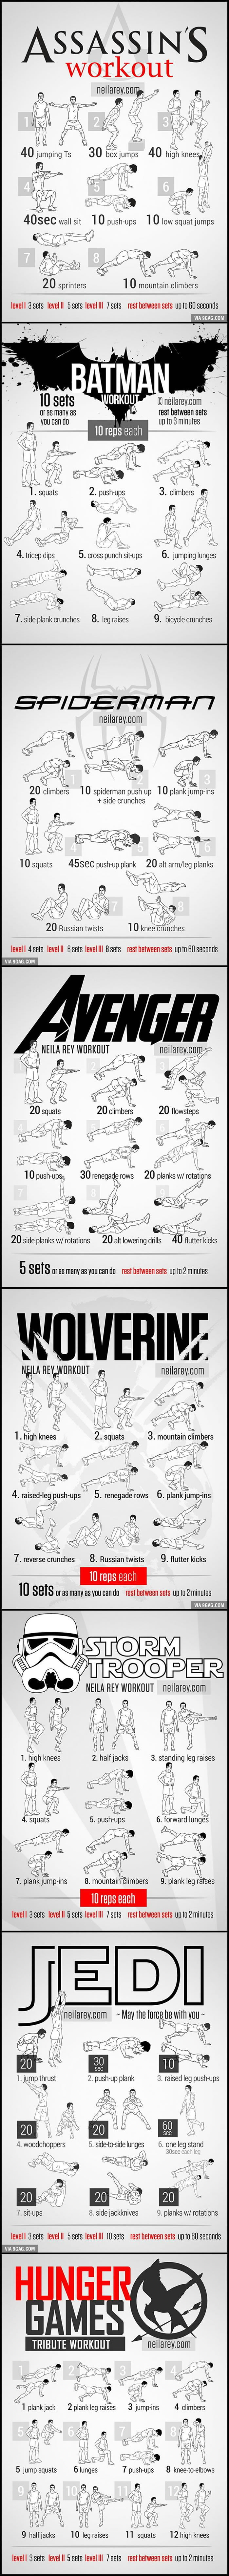 Workout for Assassin, Batman, Spiderman, Avenger, Wolverine...